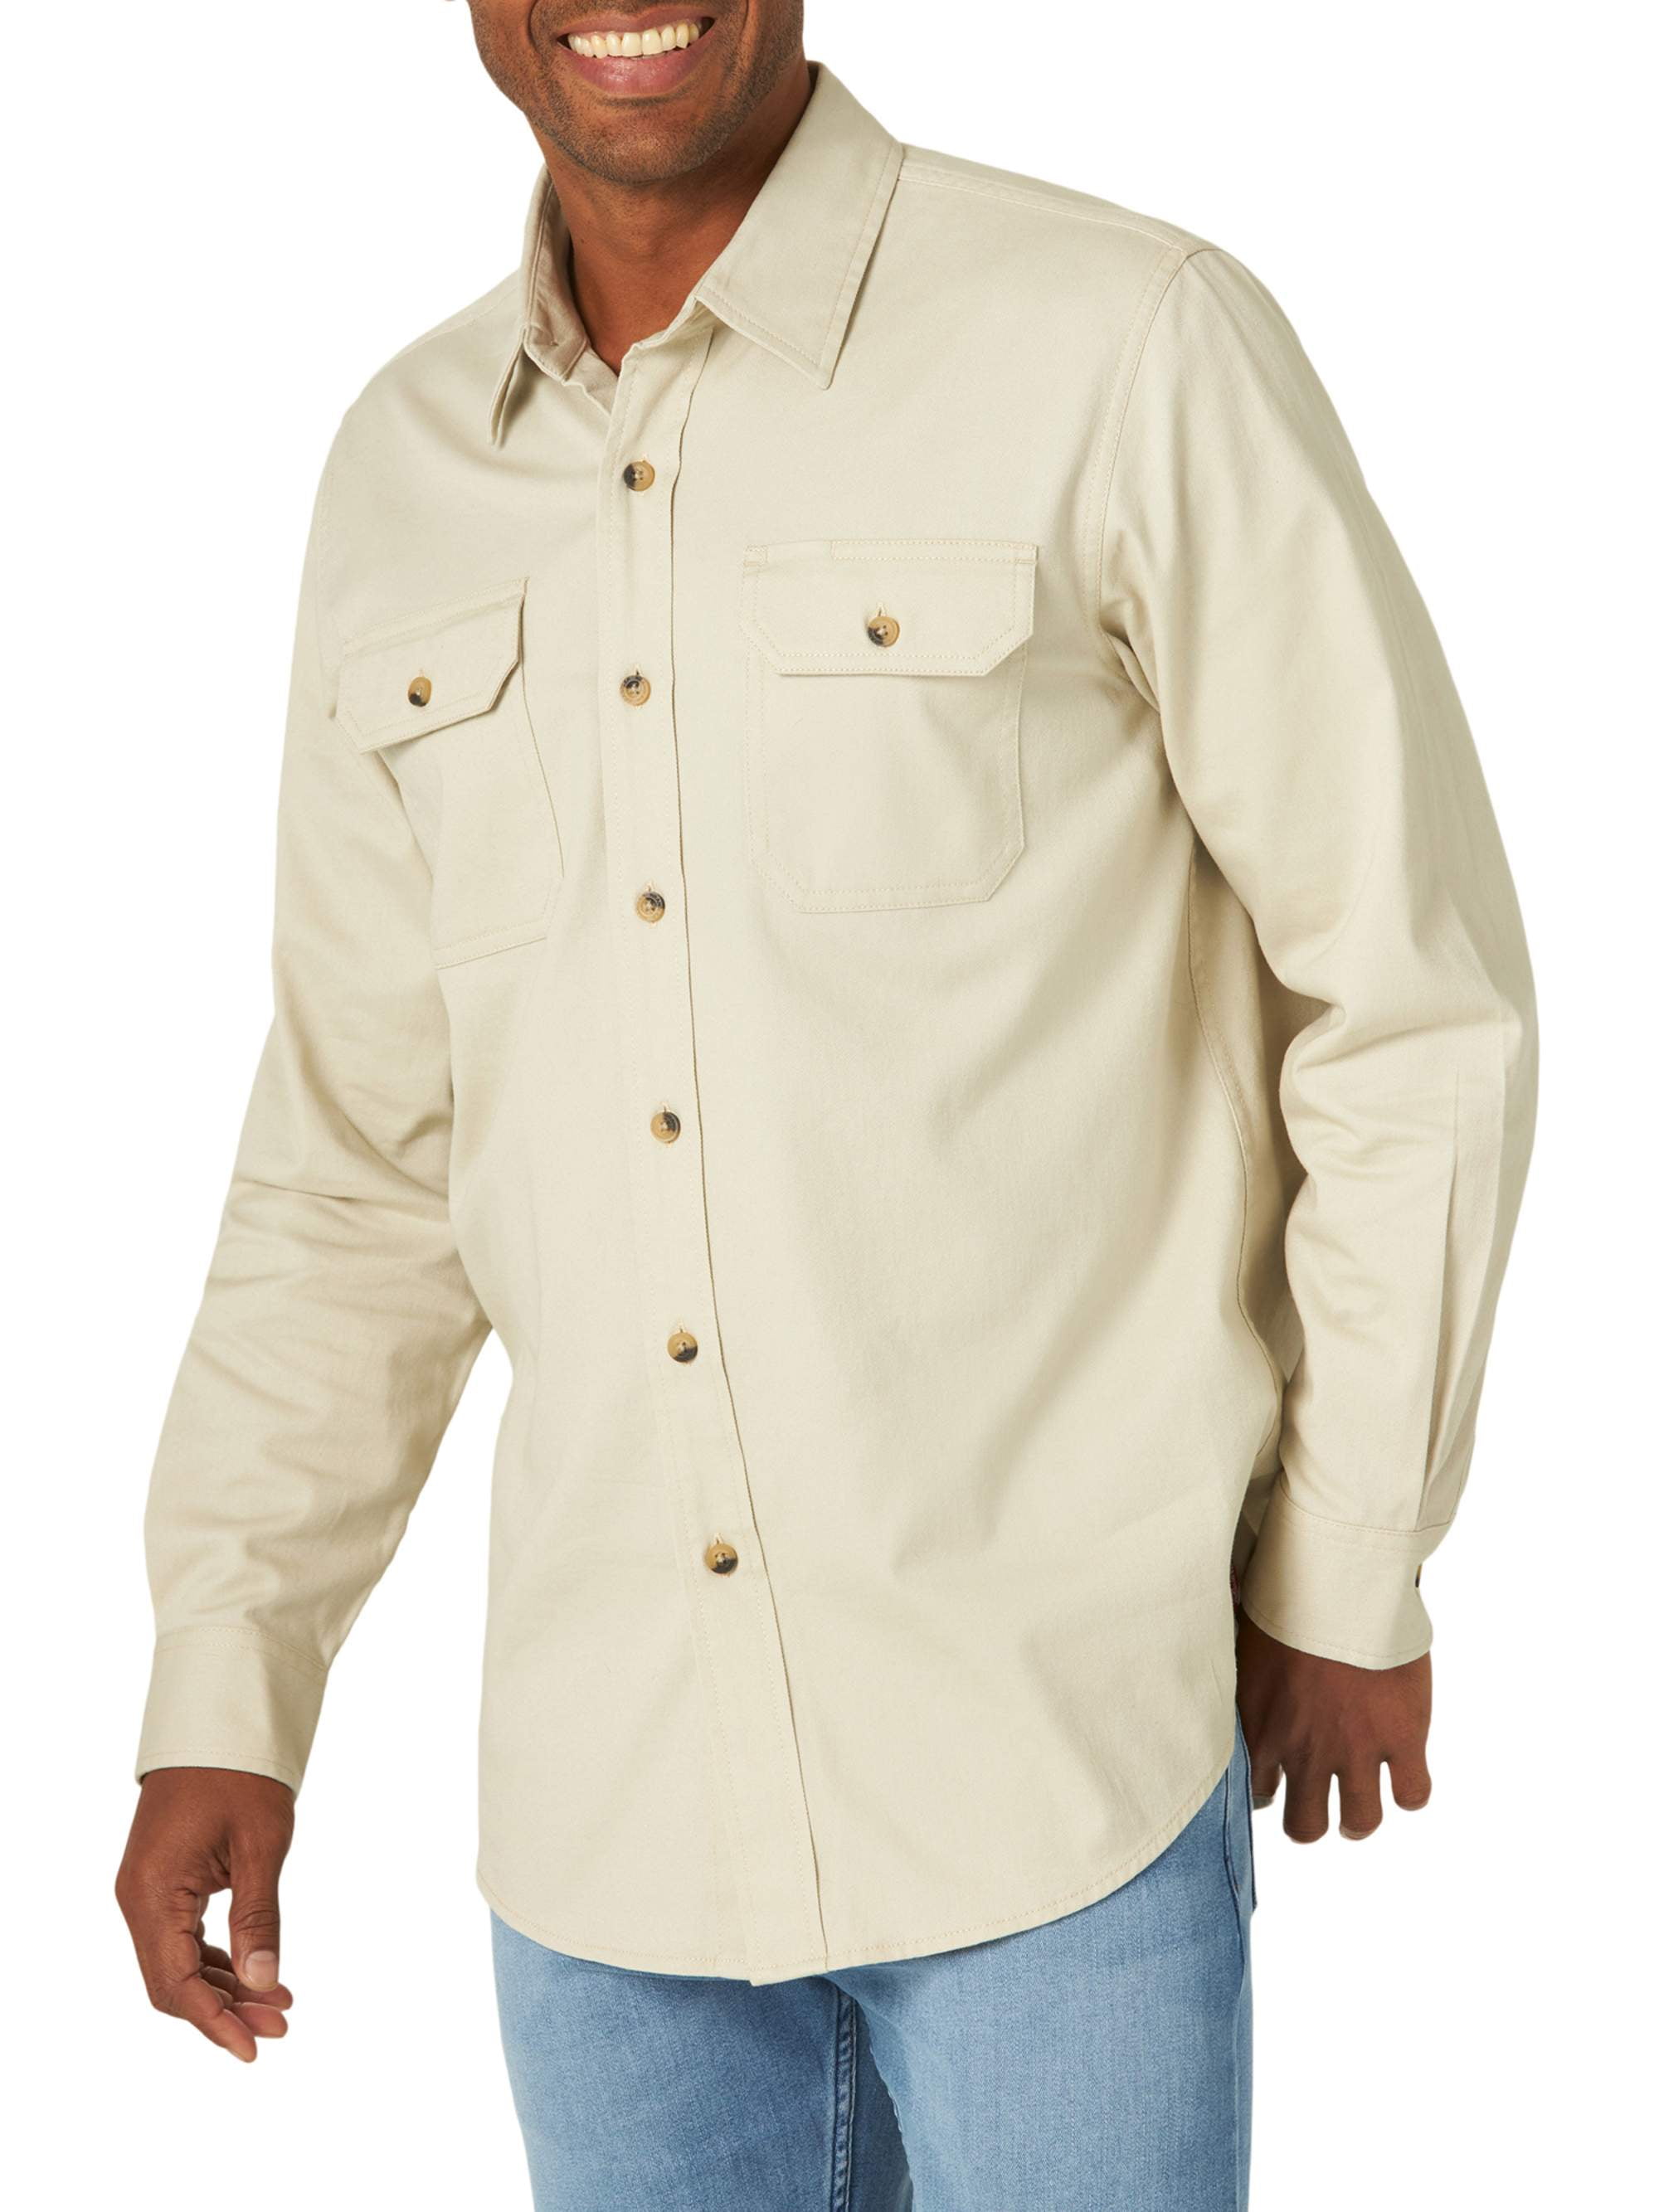 Wrangler Men's Long Sleeve Solid Twill Shirt - Walmart.com